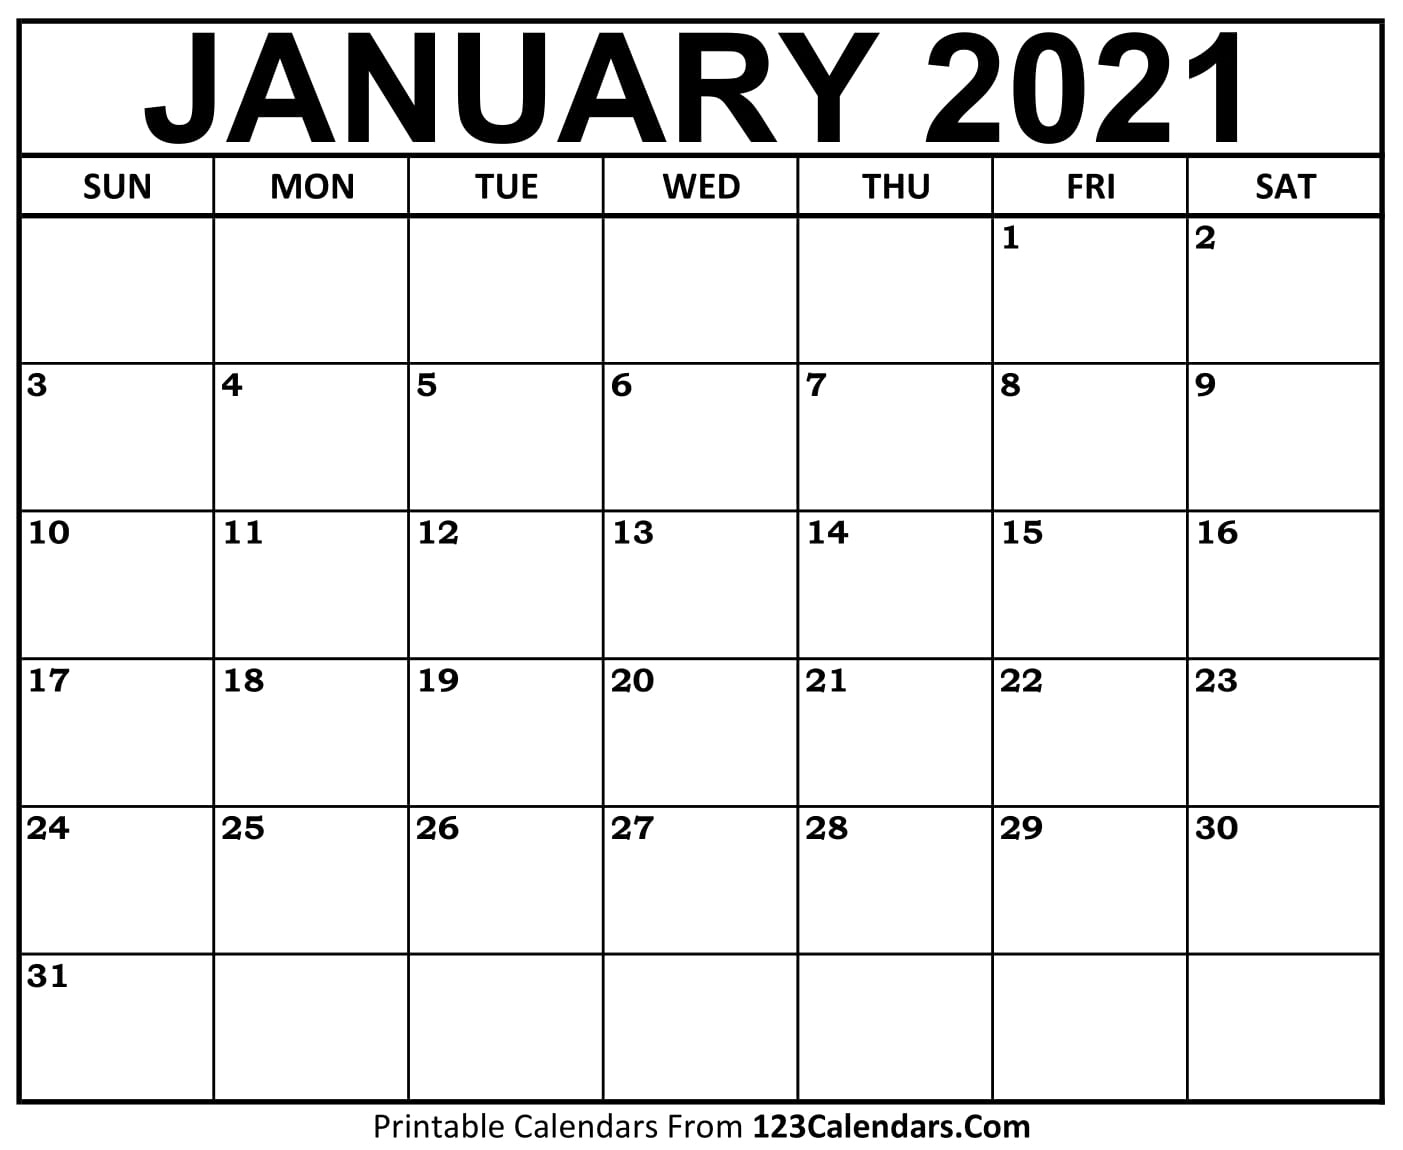 Printable January 2021 Calendar Templates | 123Calendars Google Printable Monthly Calendar 2021